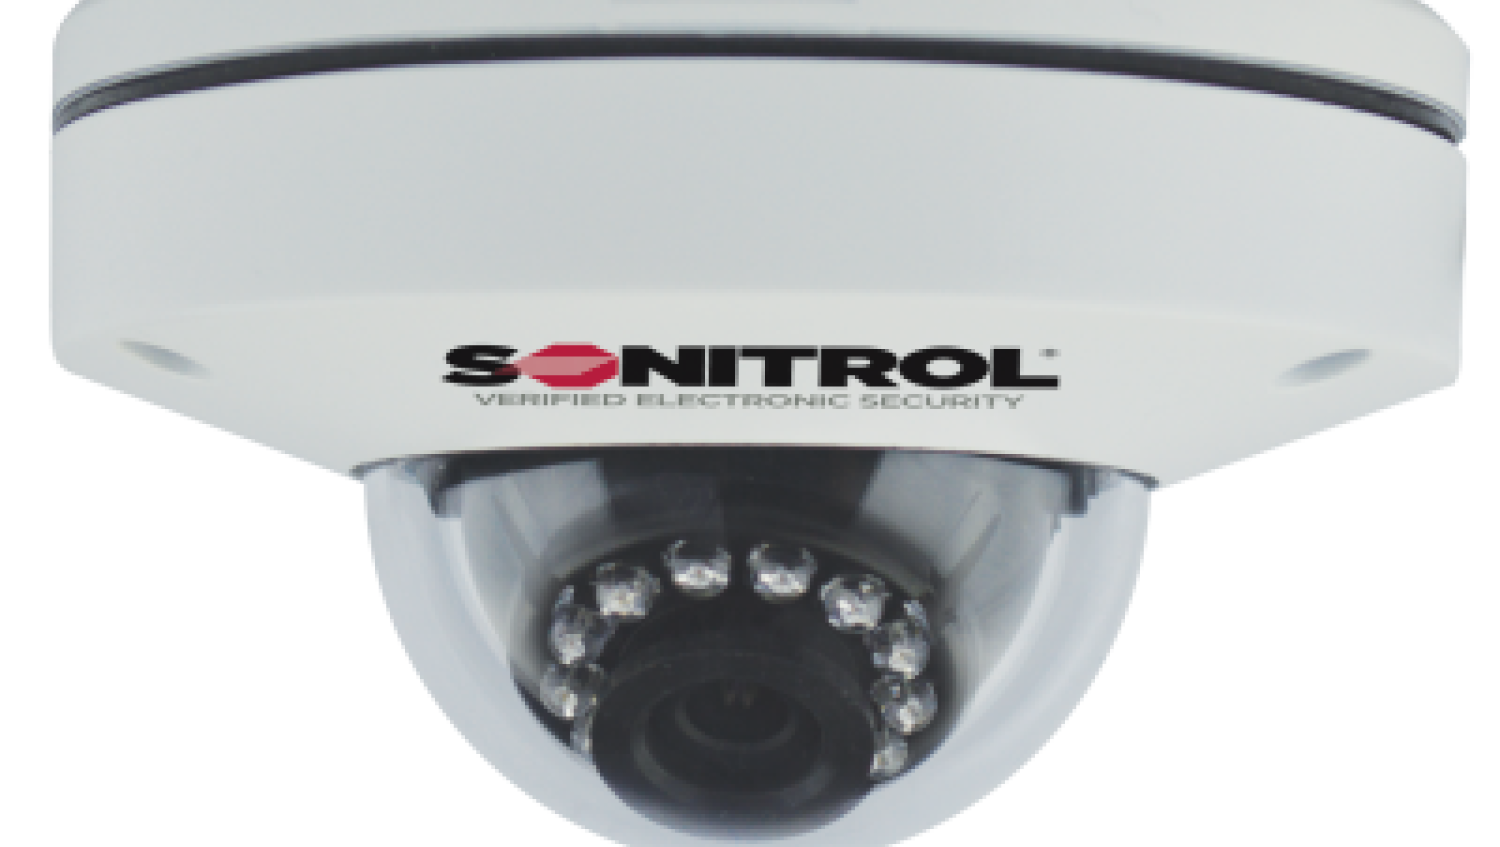 Sonitrol Security Camera ceiling